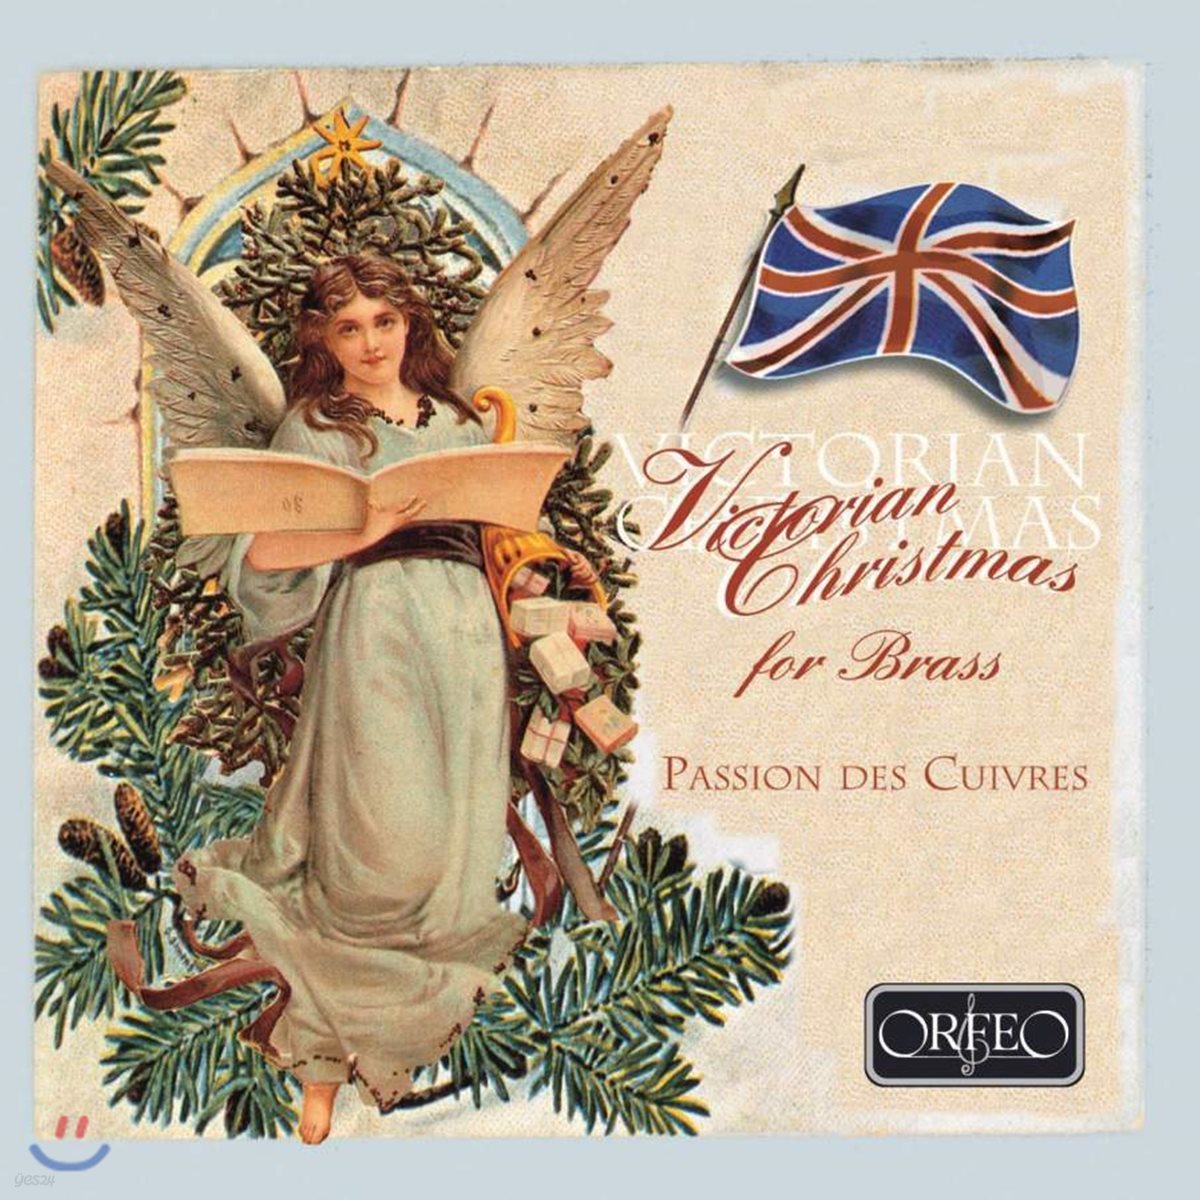 Passion des Cuivres 승리의 크리스마스 (Victorian Christmas for Brass)